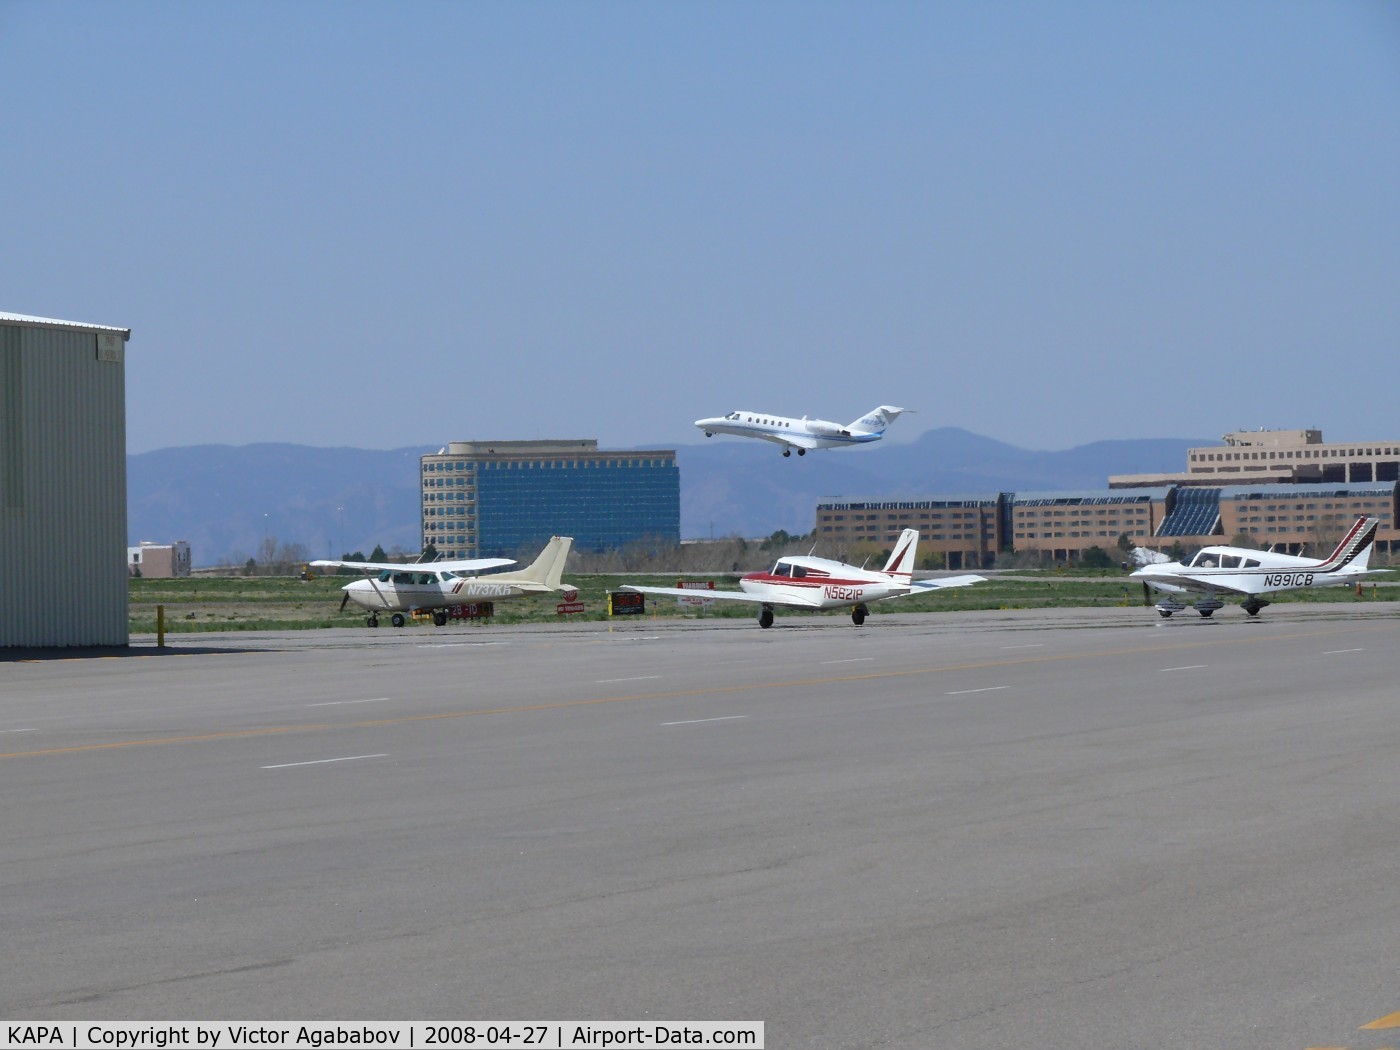 Centennial Airport (APA) - Run-ups at runway 10. And a jet taking off rwy 17L as a bonus.